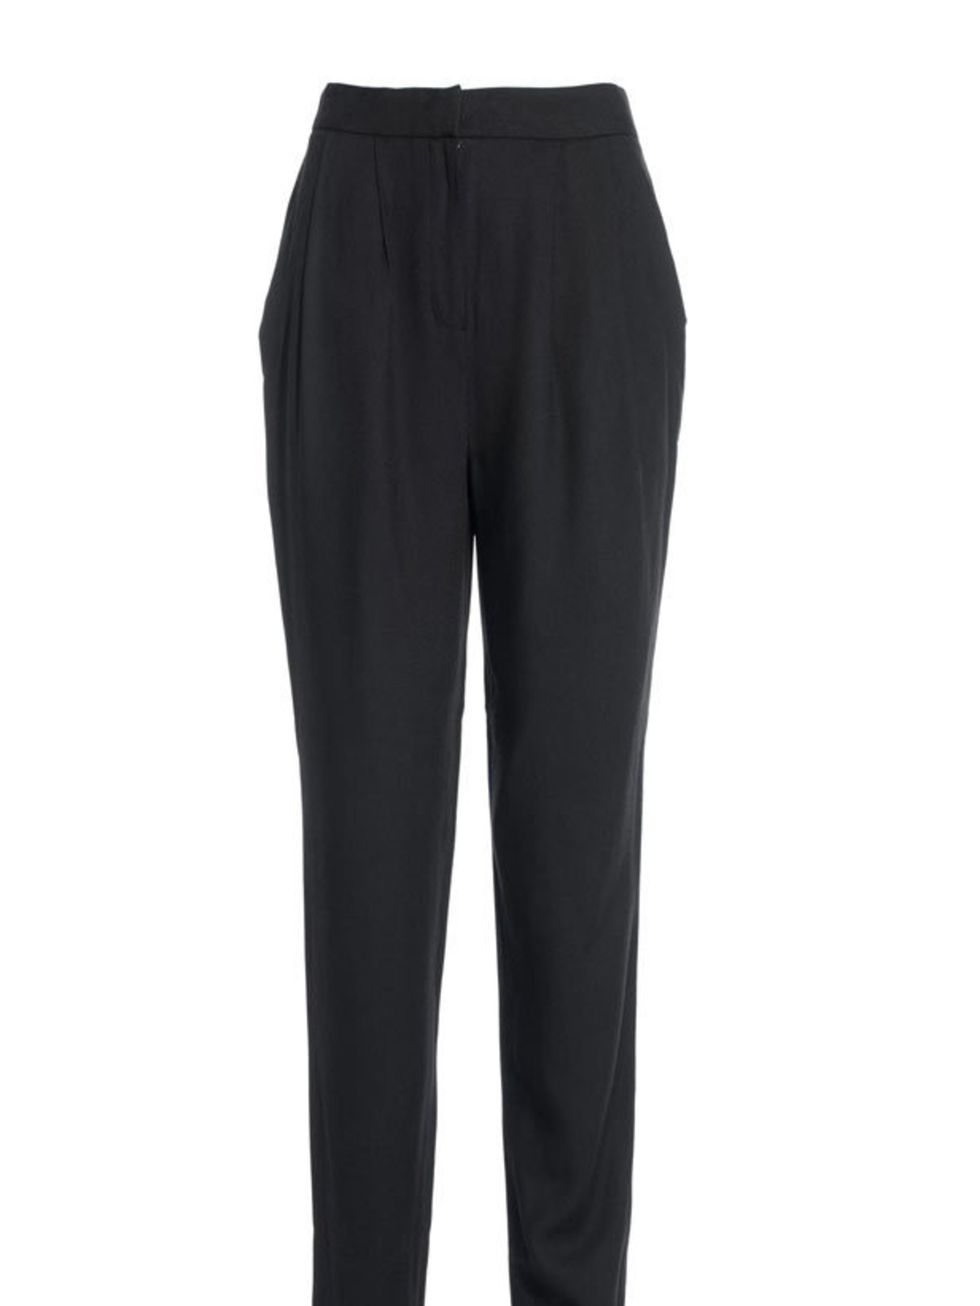 <p>THE BLACK TROUSERS</p><p><a href="http://www.reissonline.com/shop/womens/casual_trousers/gilda/black/">Reiss</a> clasic black trousers, £110</p>